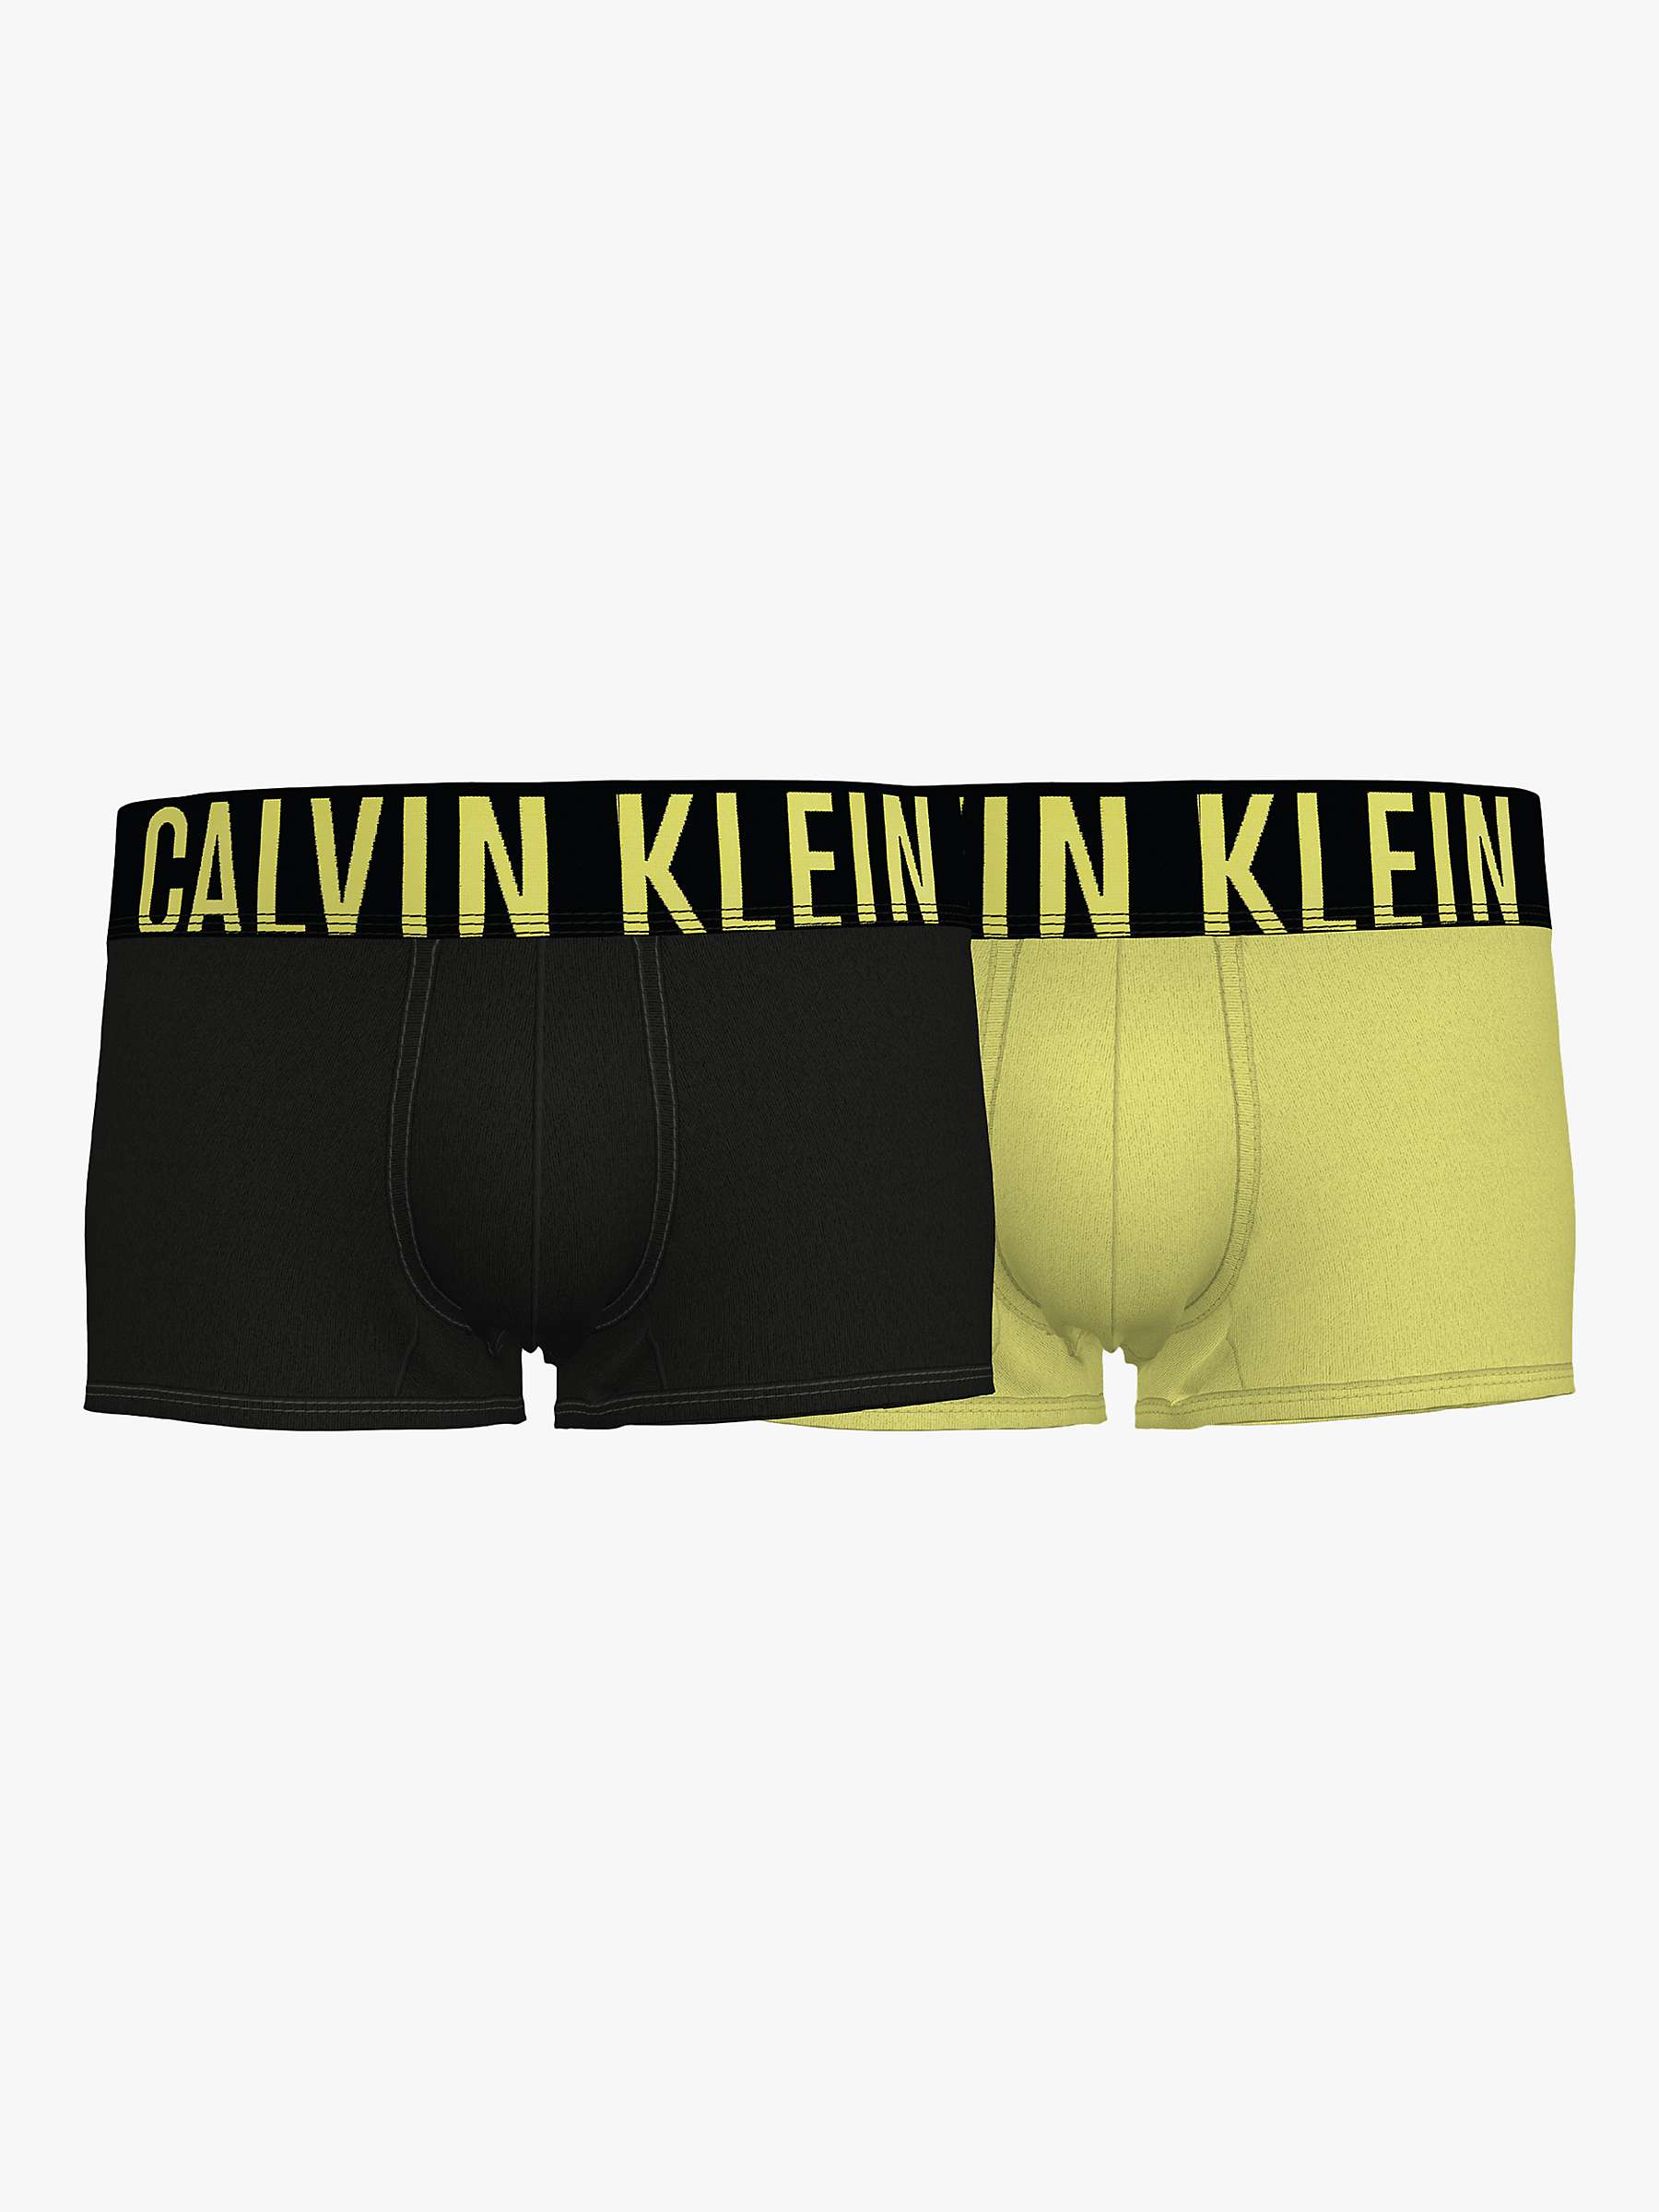 Calvin Klein Intense Power Low Cotton Stretch Trunks, Pack of 2,  Black/Mesqu Lime at John Lewis & Partners